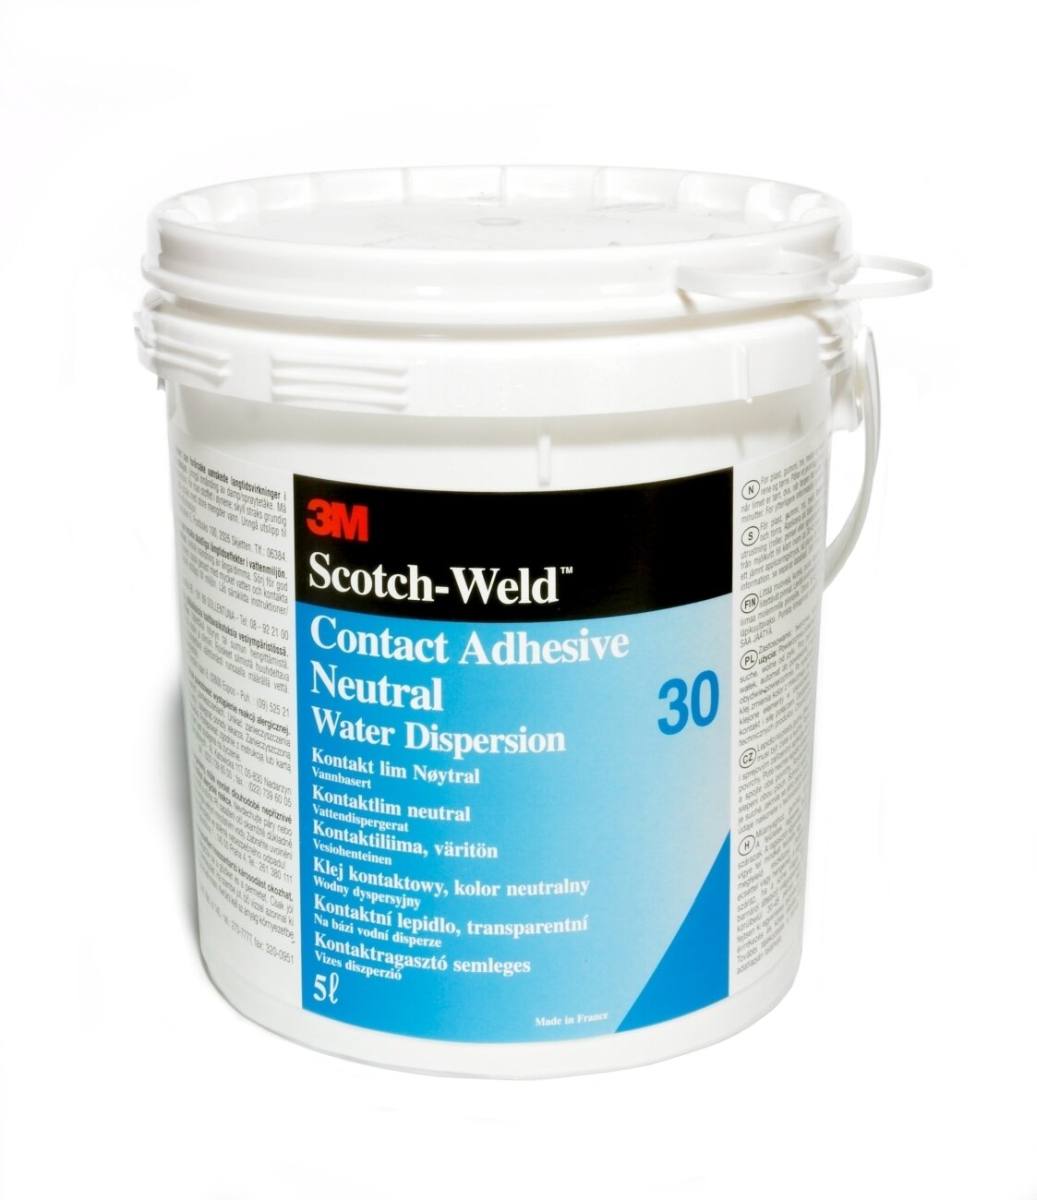 3M Scotch-Weld dispersion adhesive based on polychloroprene 30 NF, transparent, 5 liters